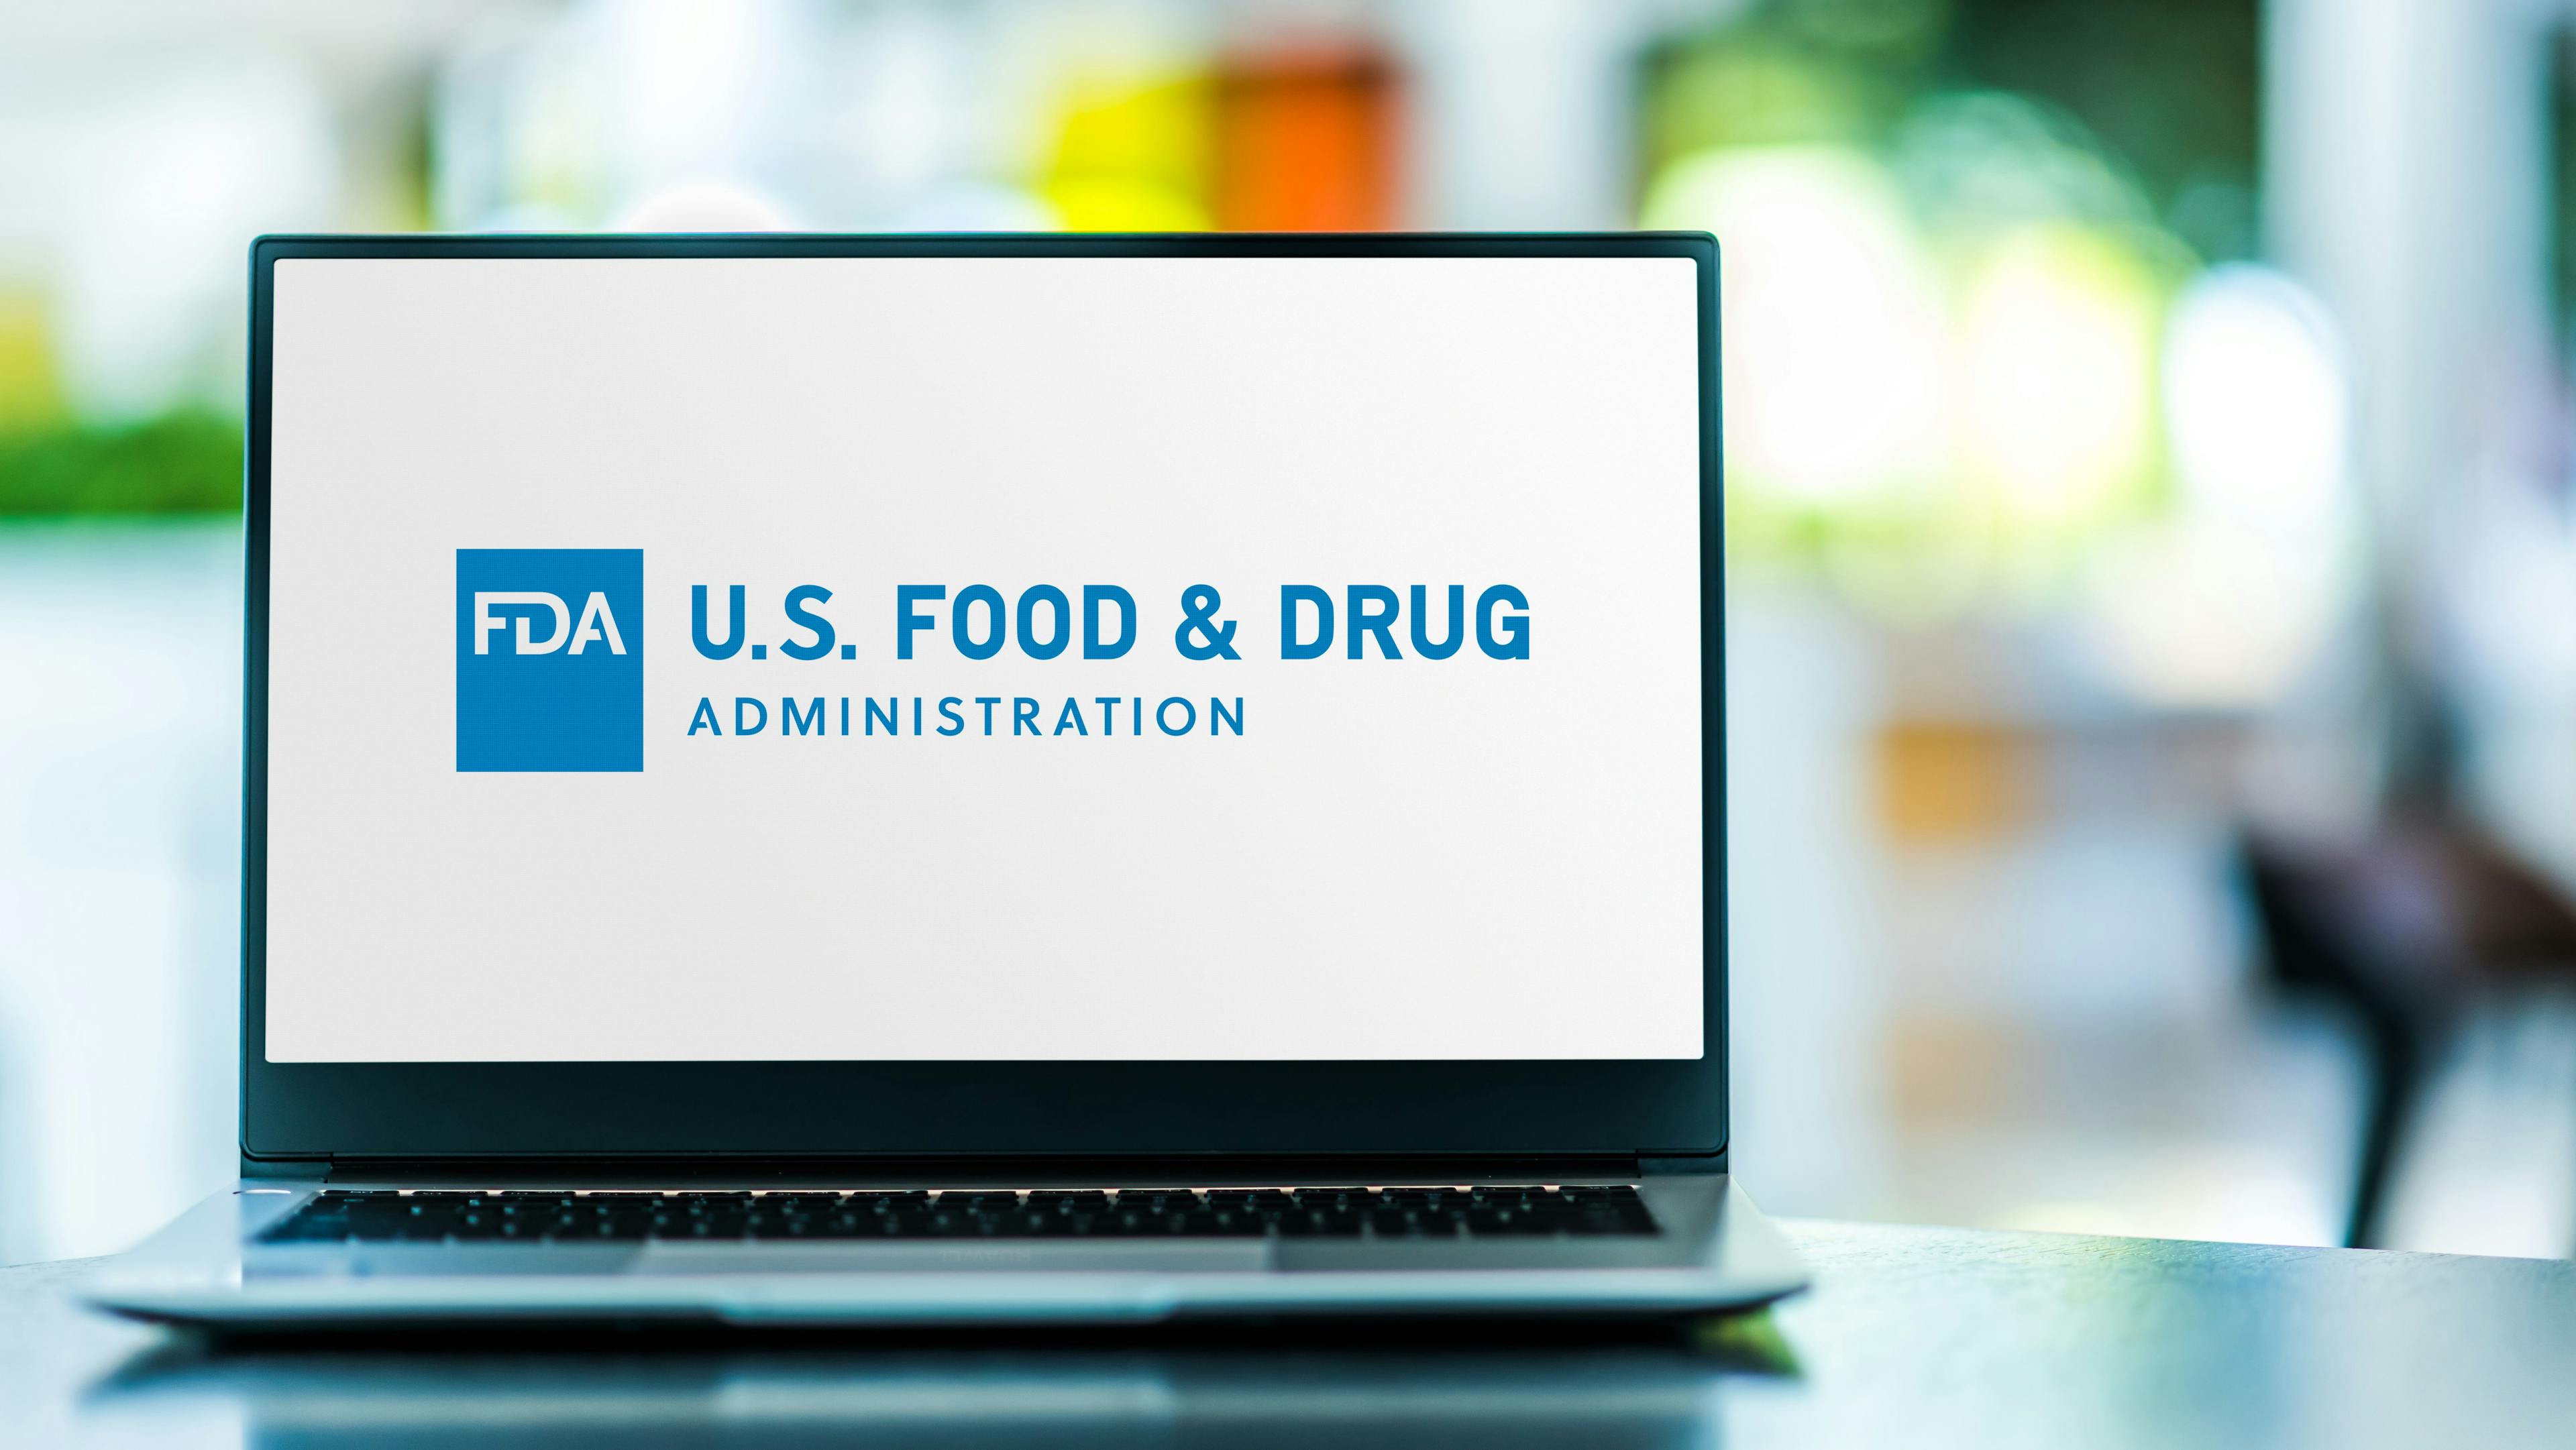 FDA logo on laptop -- Image credit: monticellllo | stock.adobe.com